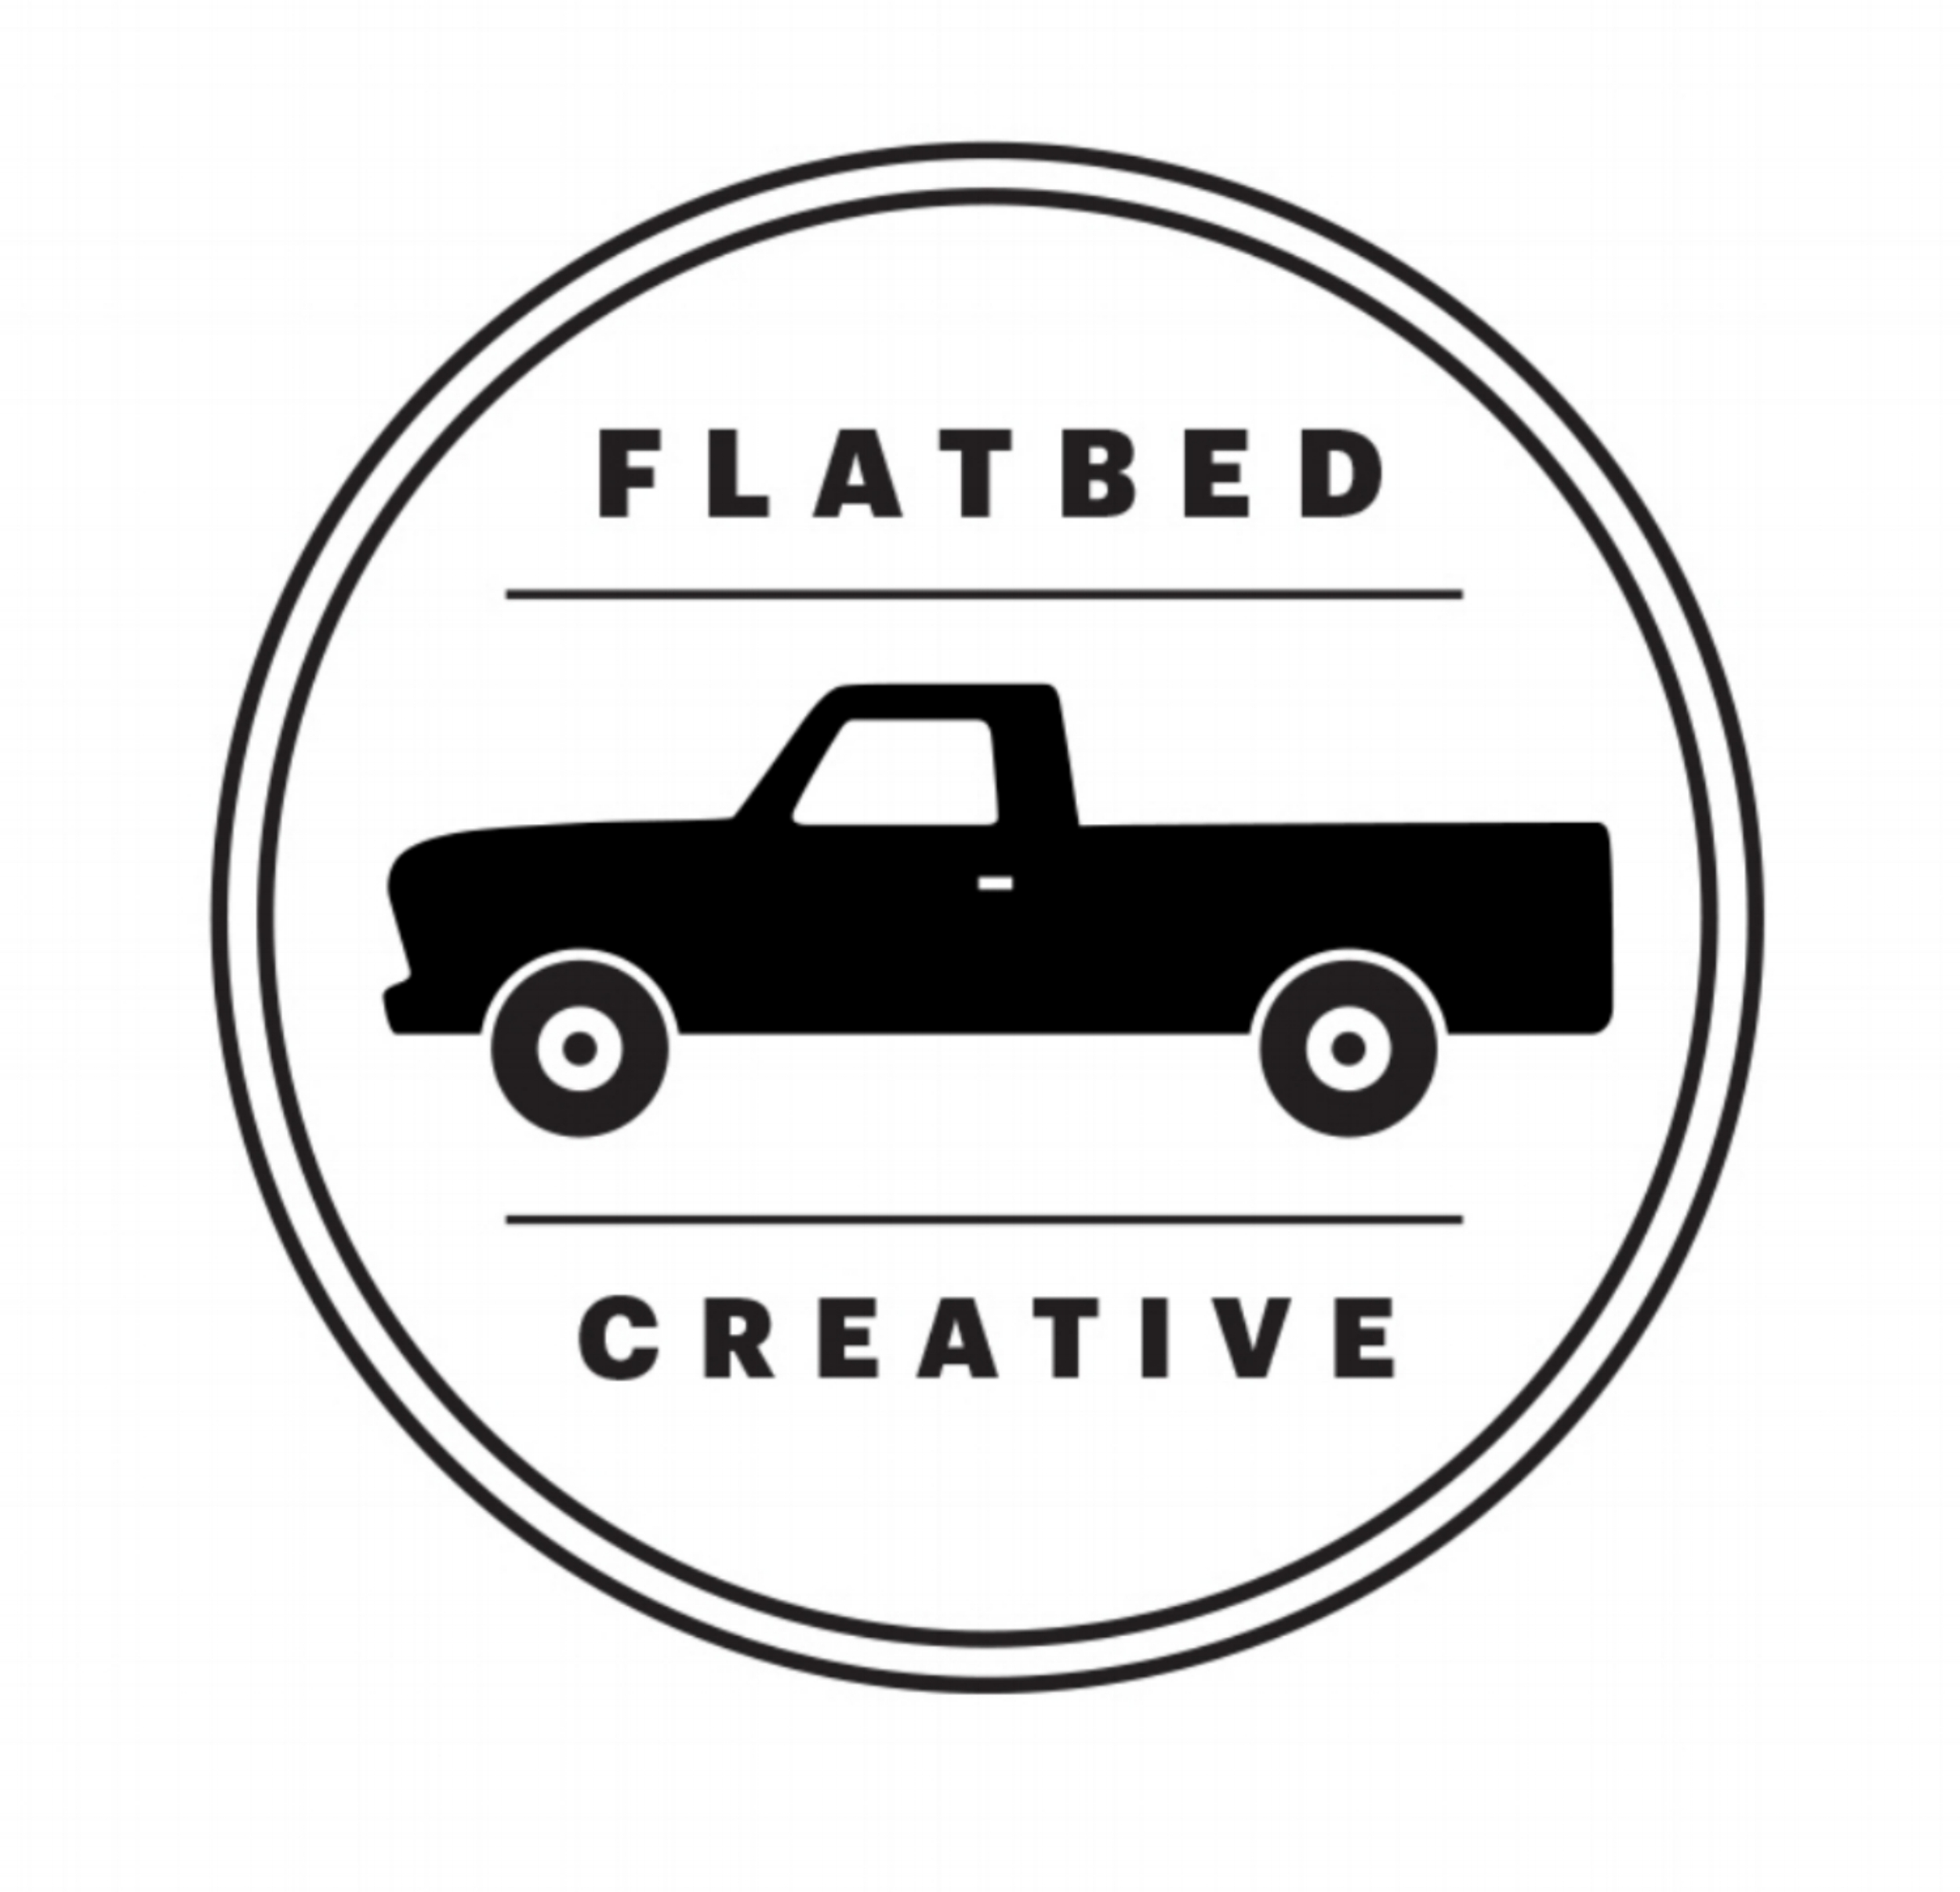 Flatbed Creative